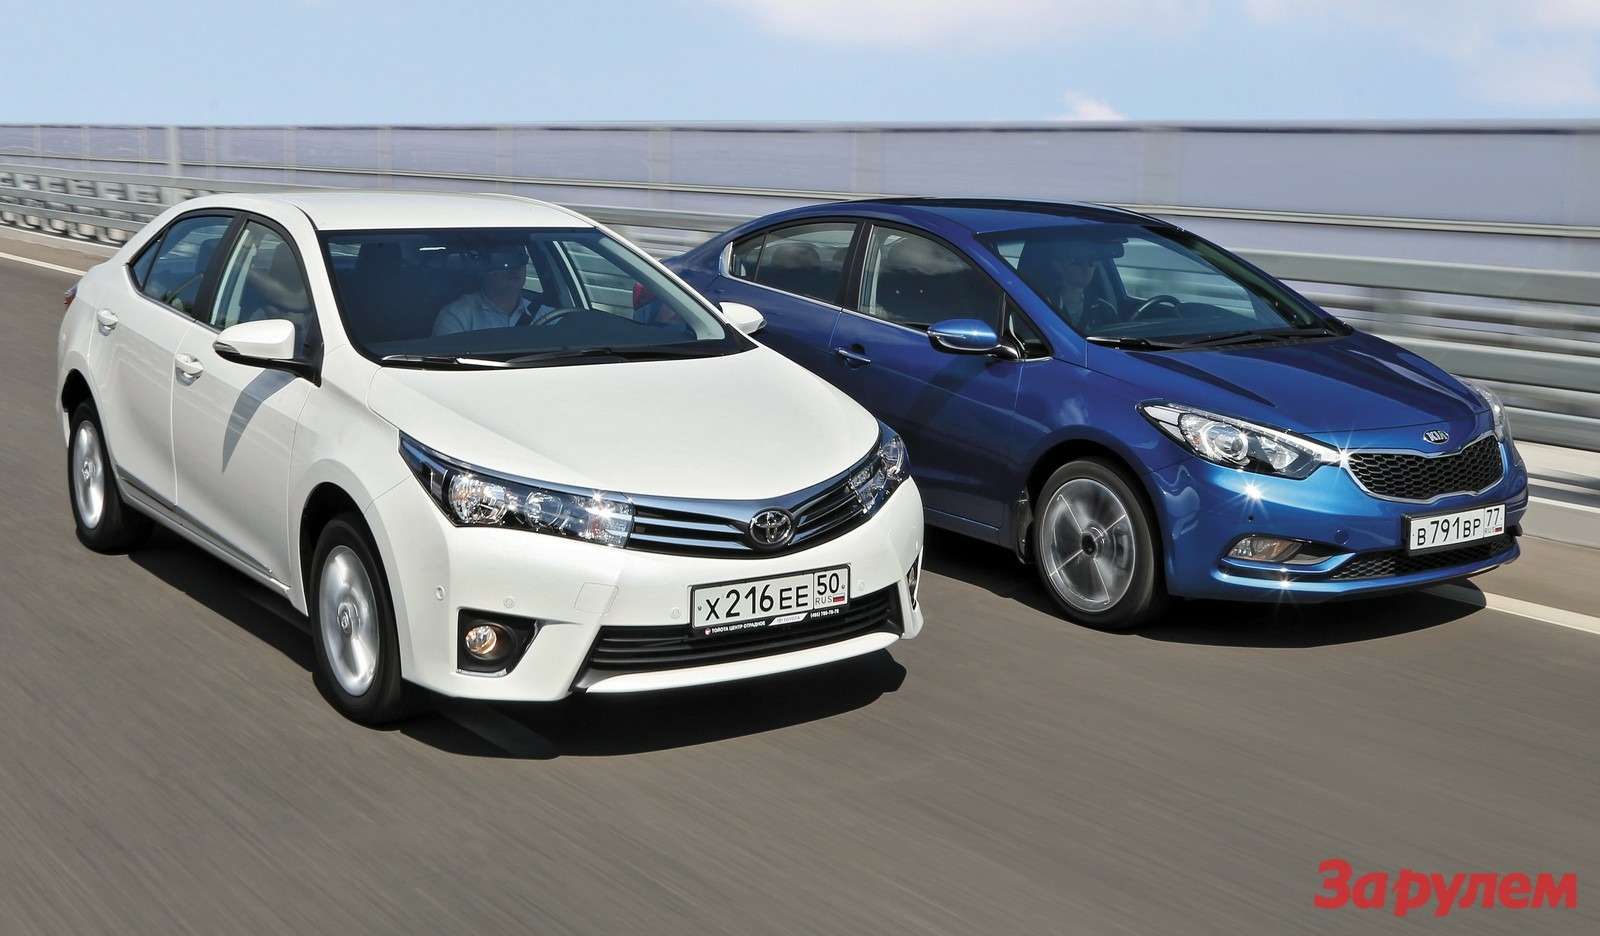 Toyota Corolla Престиж 1.6 122 л.с. CVT (938 000 руб.) и Kia Cerato 
Premium + опции 
1.6 130 л.с. 6АКП (869 900 руб.)